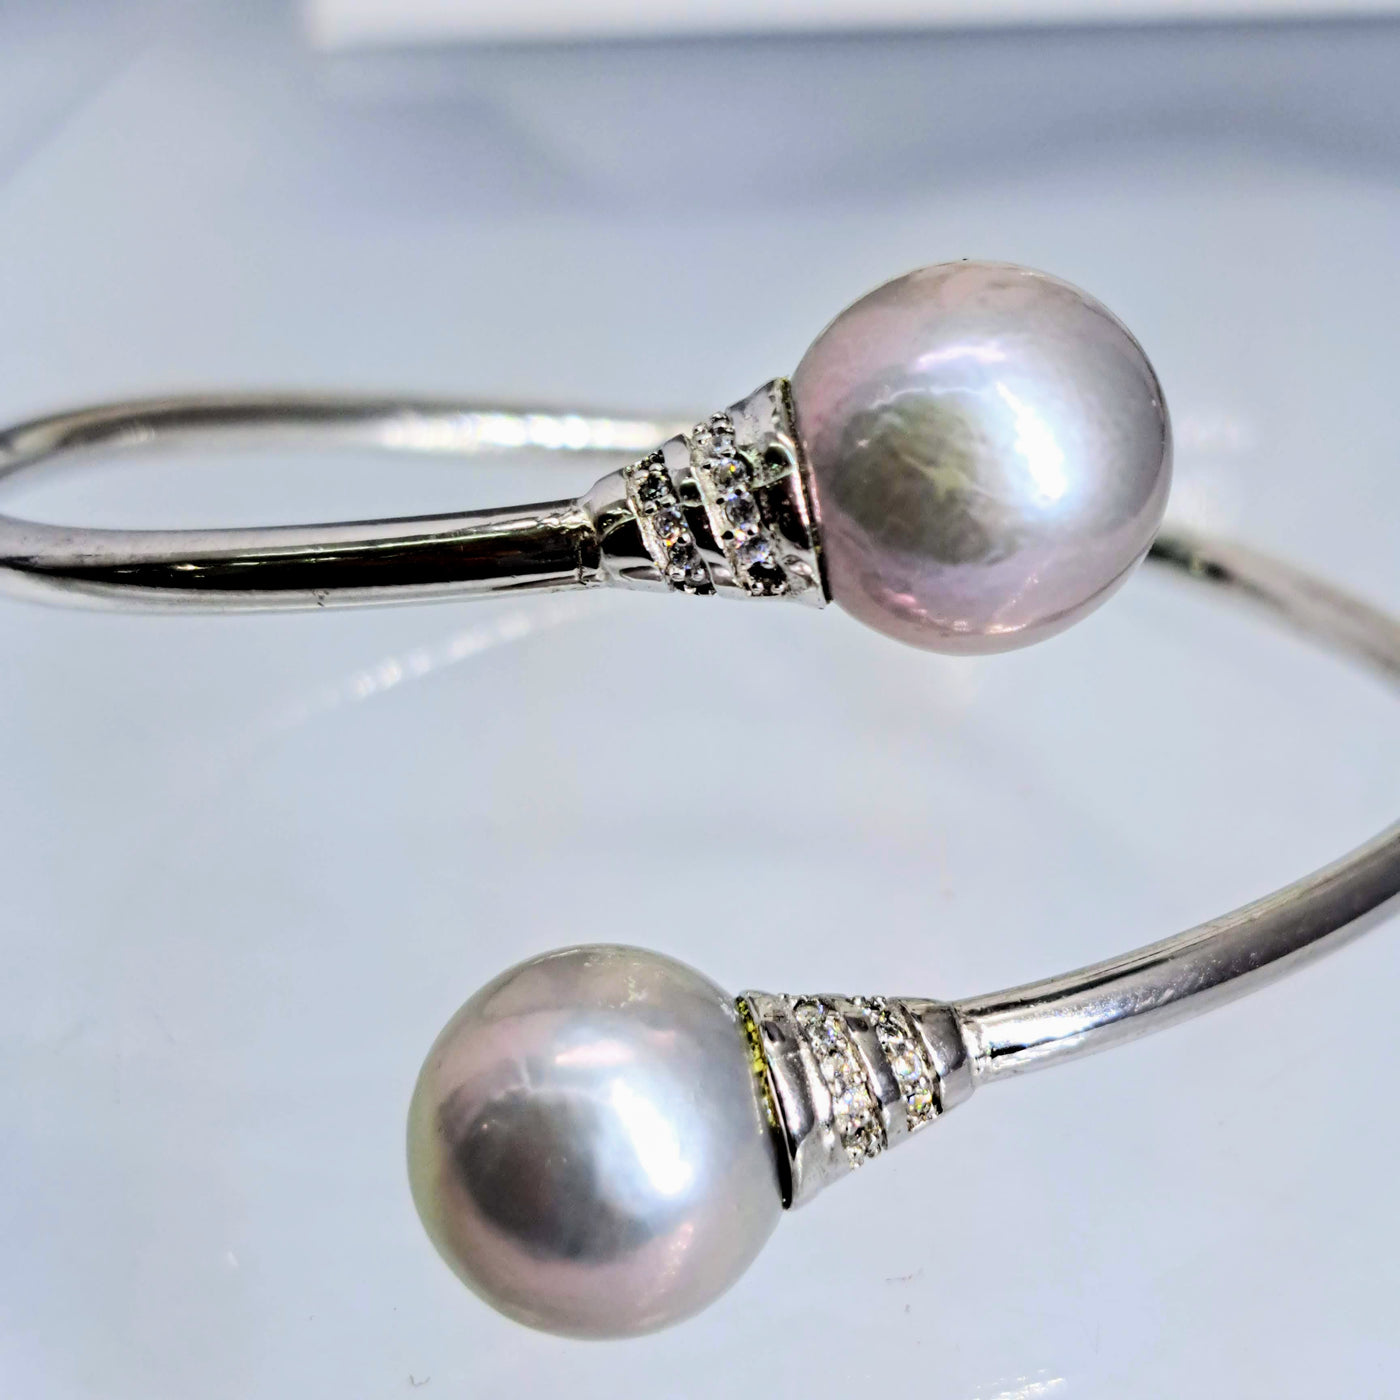 "Double Bubble" Hinged Cuff Bracelet - 13mm Edison Pearls, Topaz, Sterling